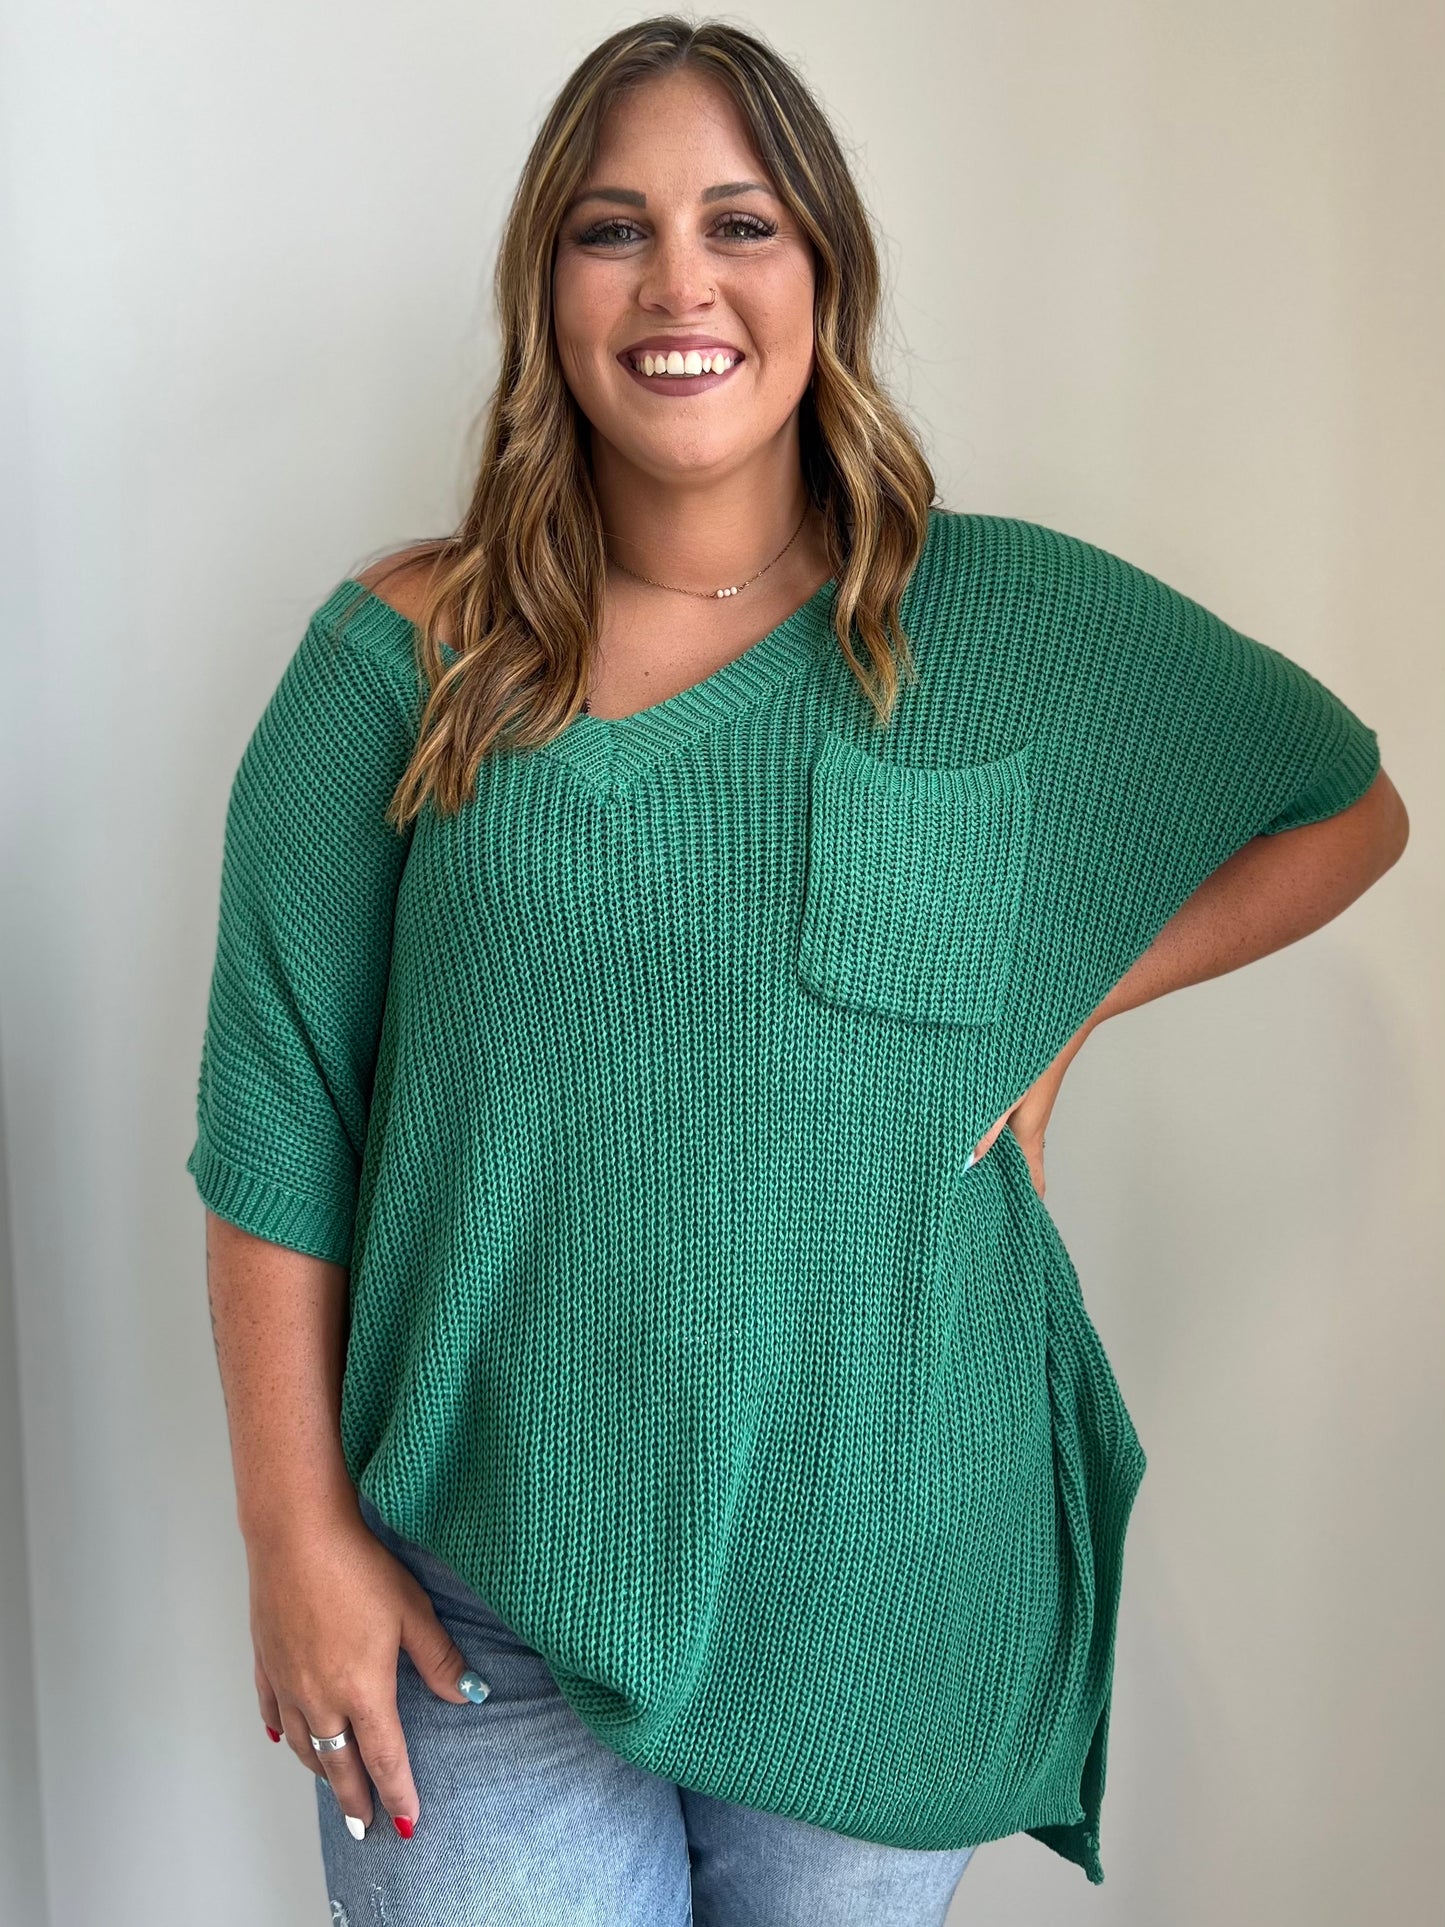 Rachelle Lush Emerald Tunic Sweater